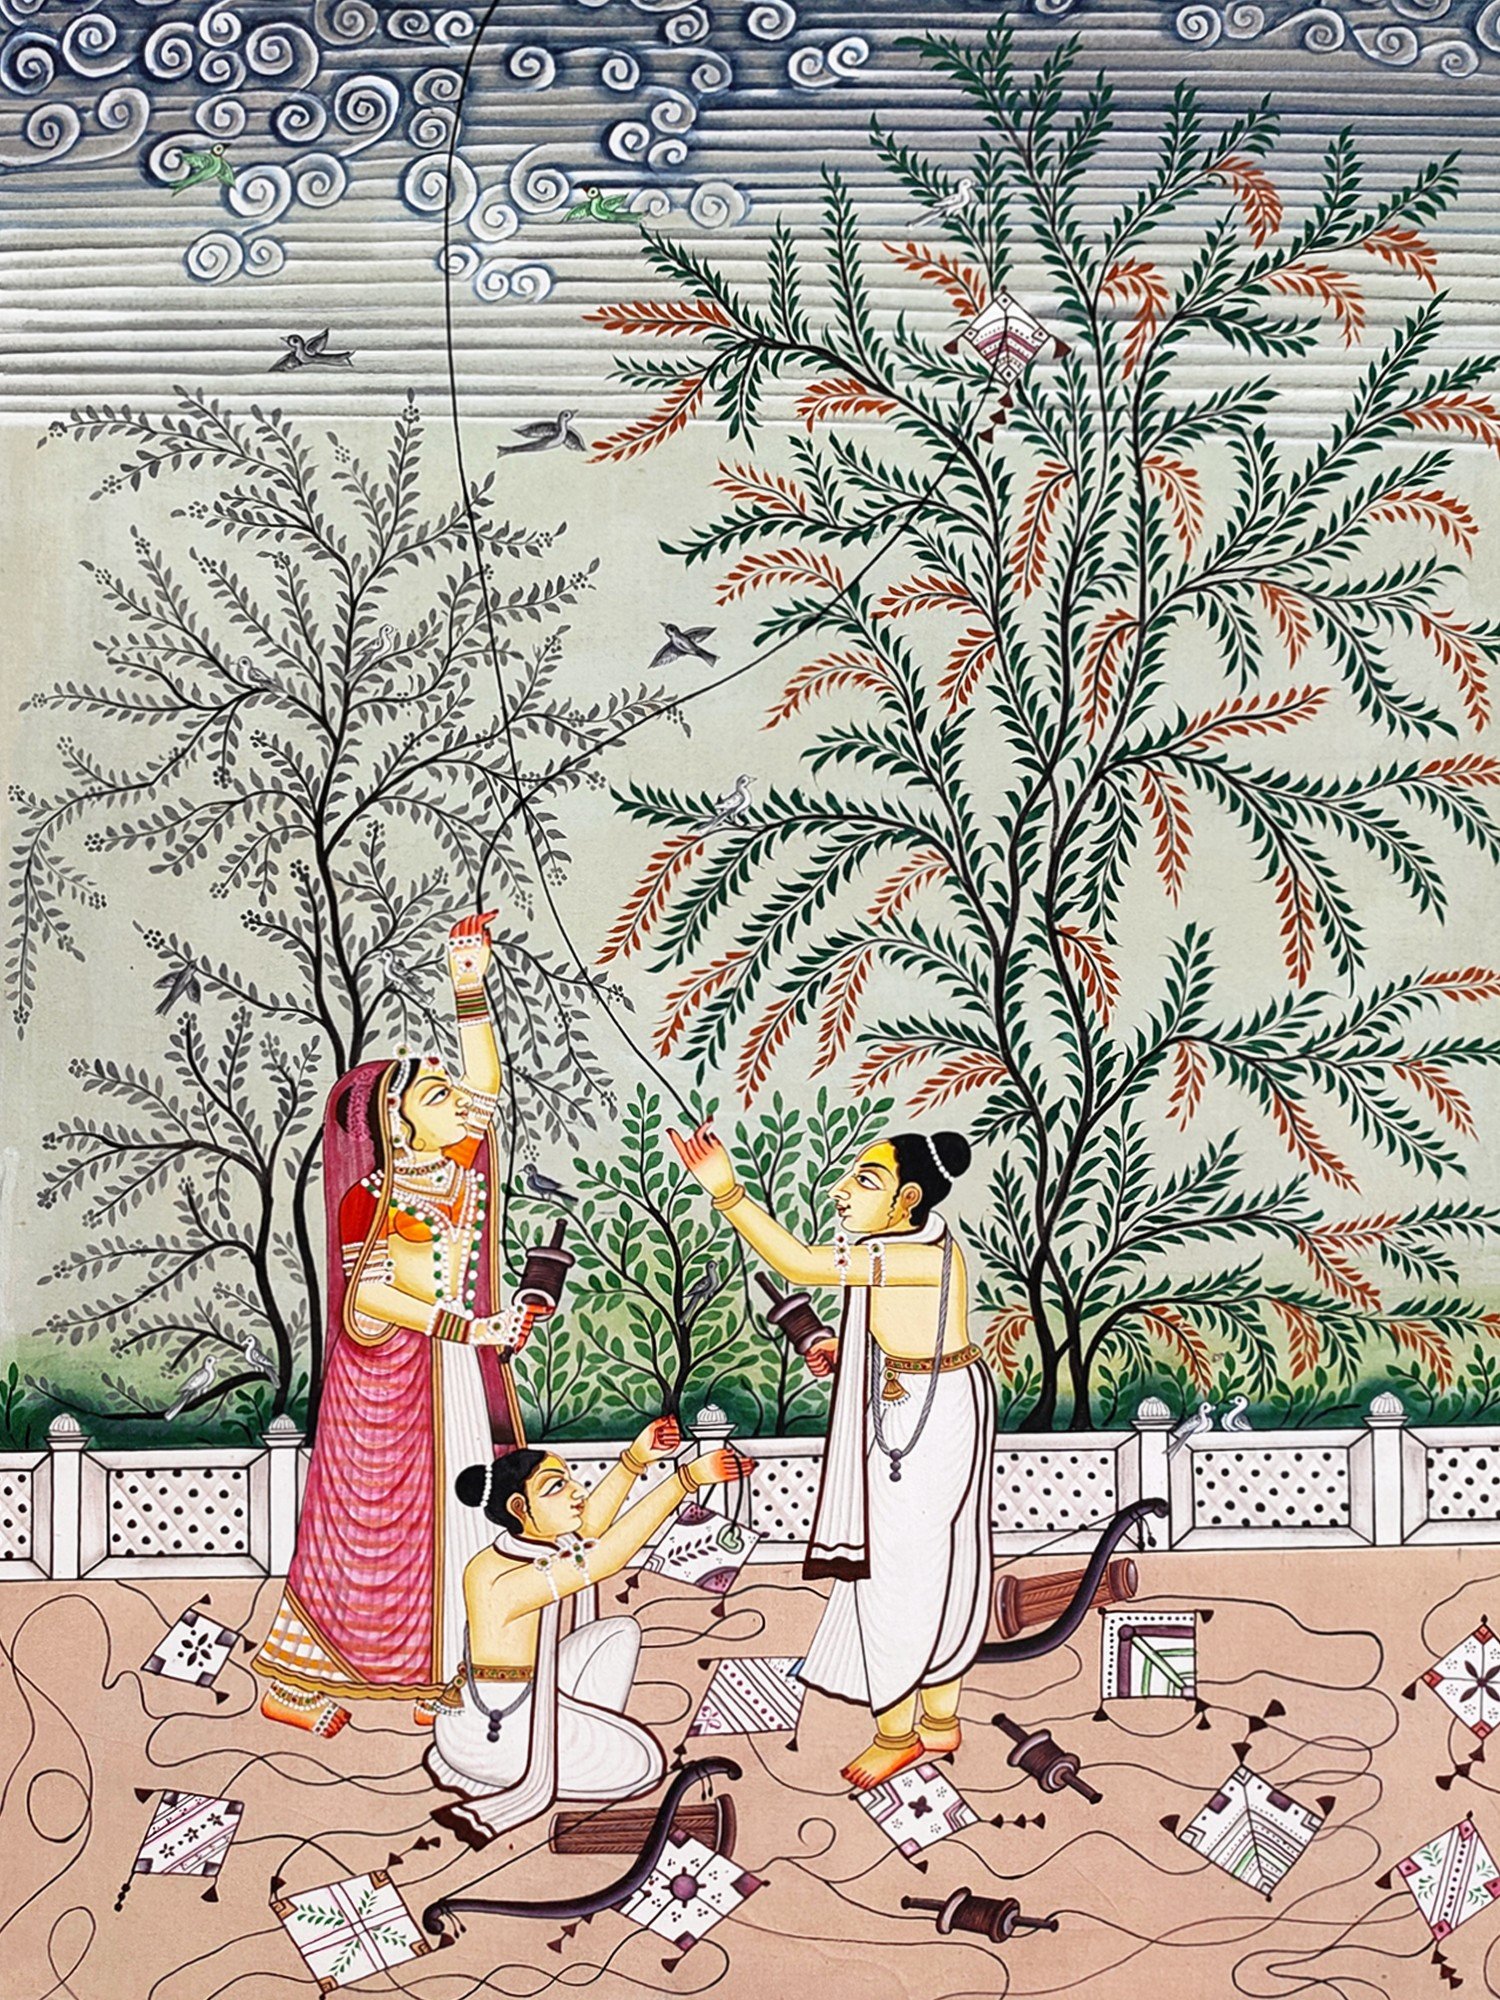 Ramayana story of Kevat taking Rama, Sita and Lakshman across the river